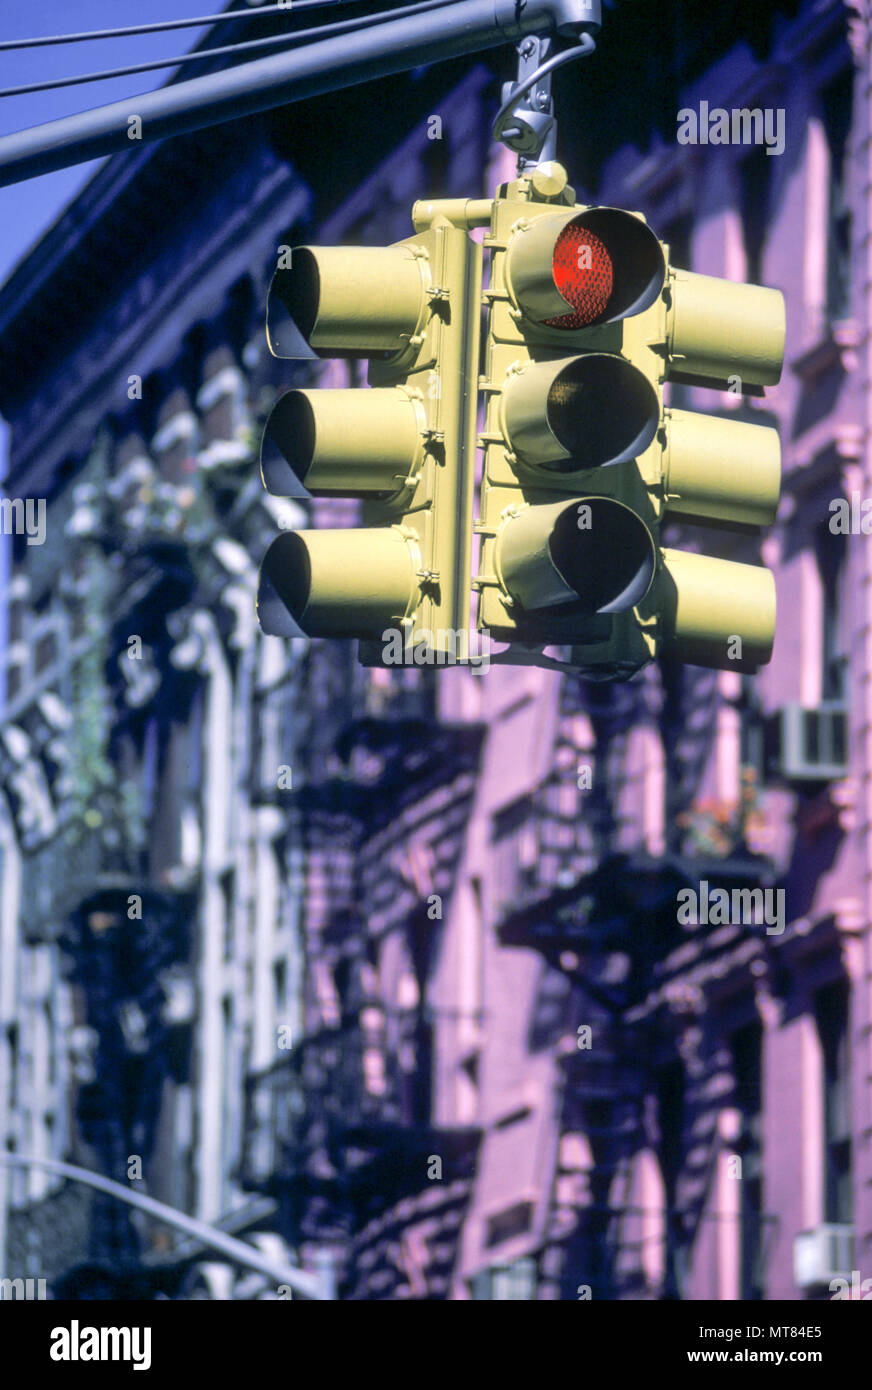 1988 HISTORICAL TRAFFIC STOP LIGHT SOHO MANHATTAN NEW YORK CITY USA Stock Photo